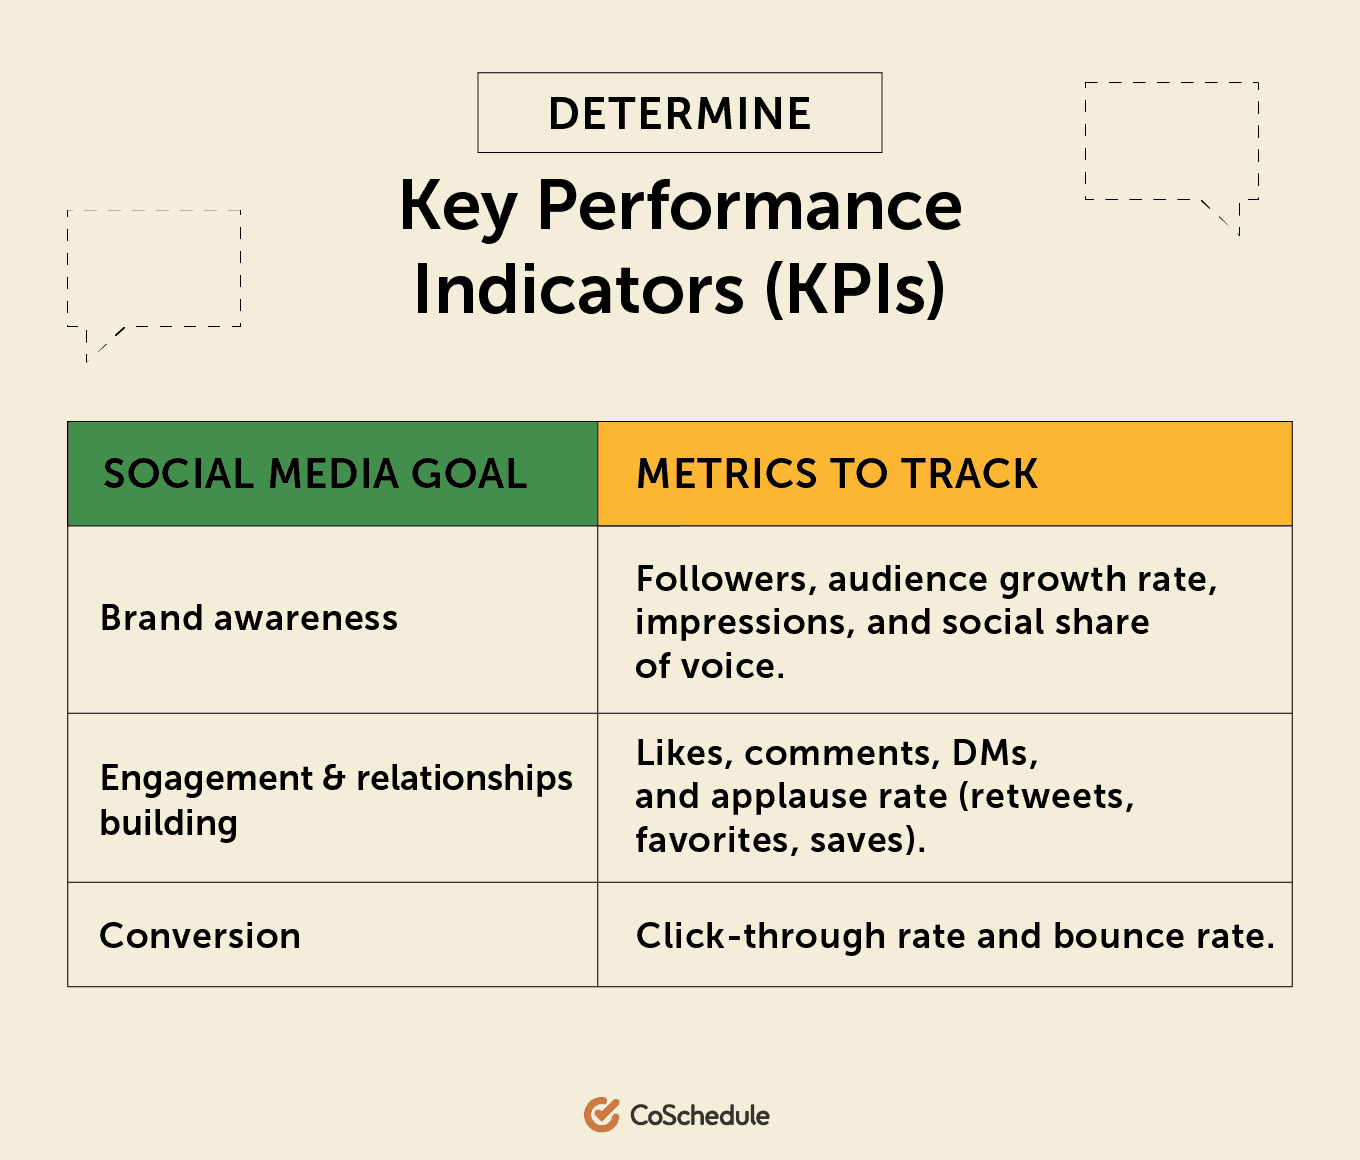 Determine your key performance indicators (KPIs)